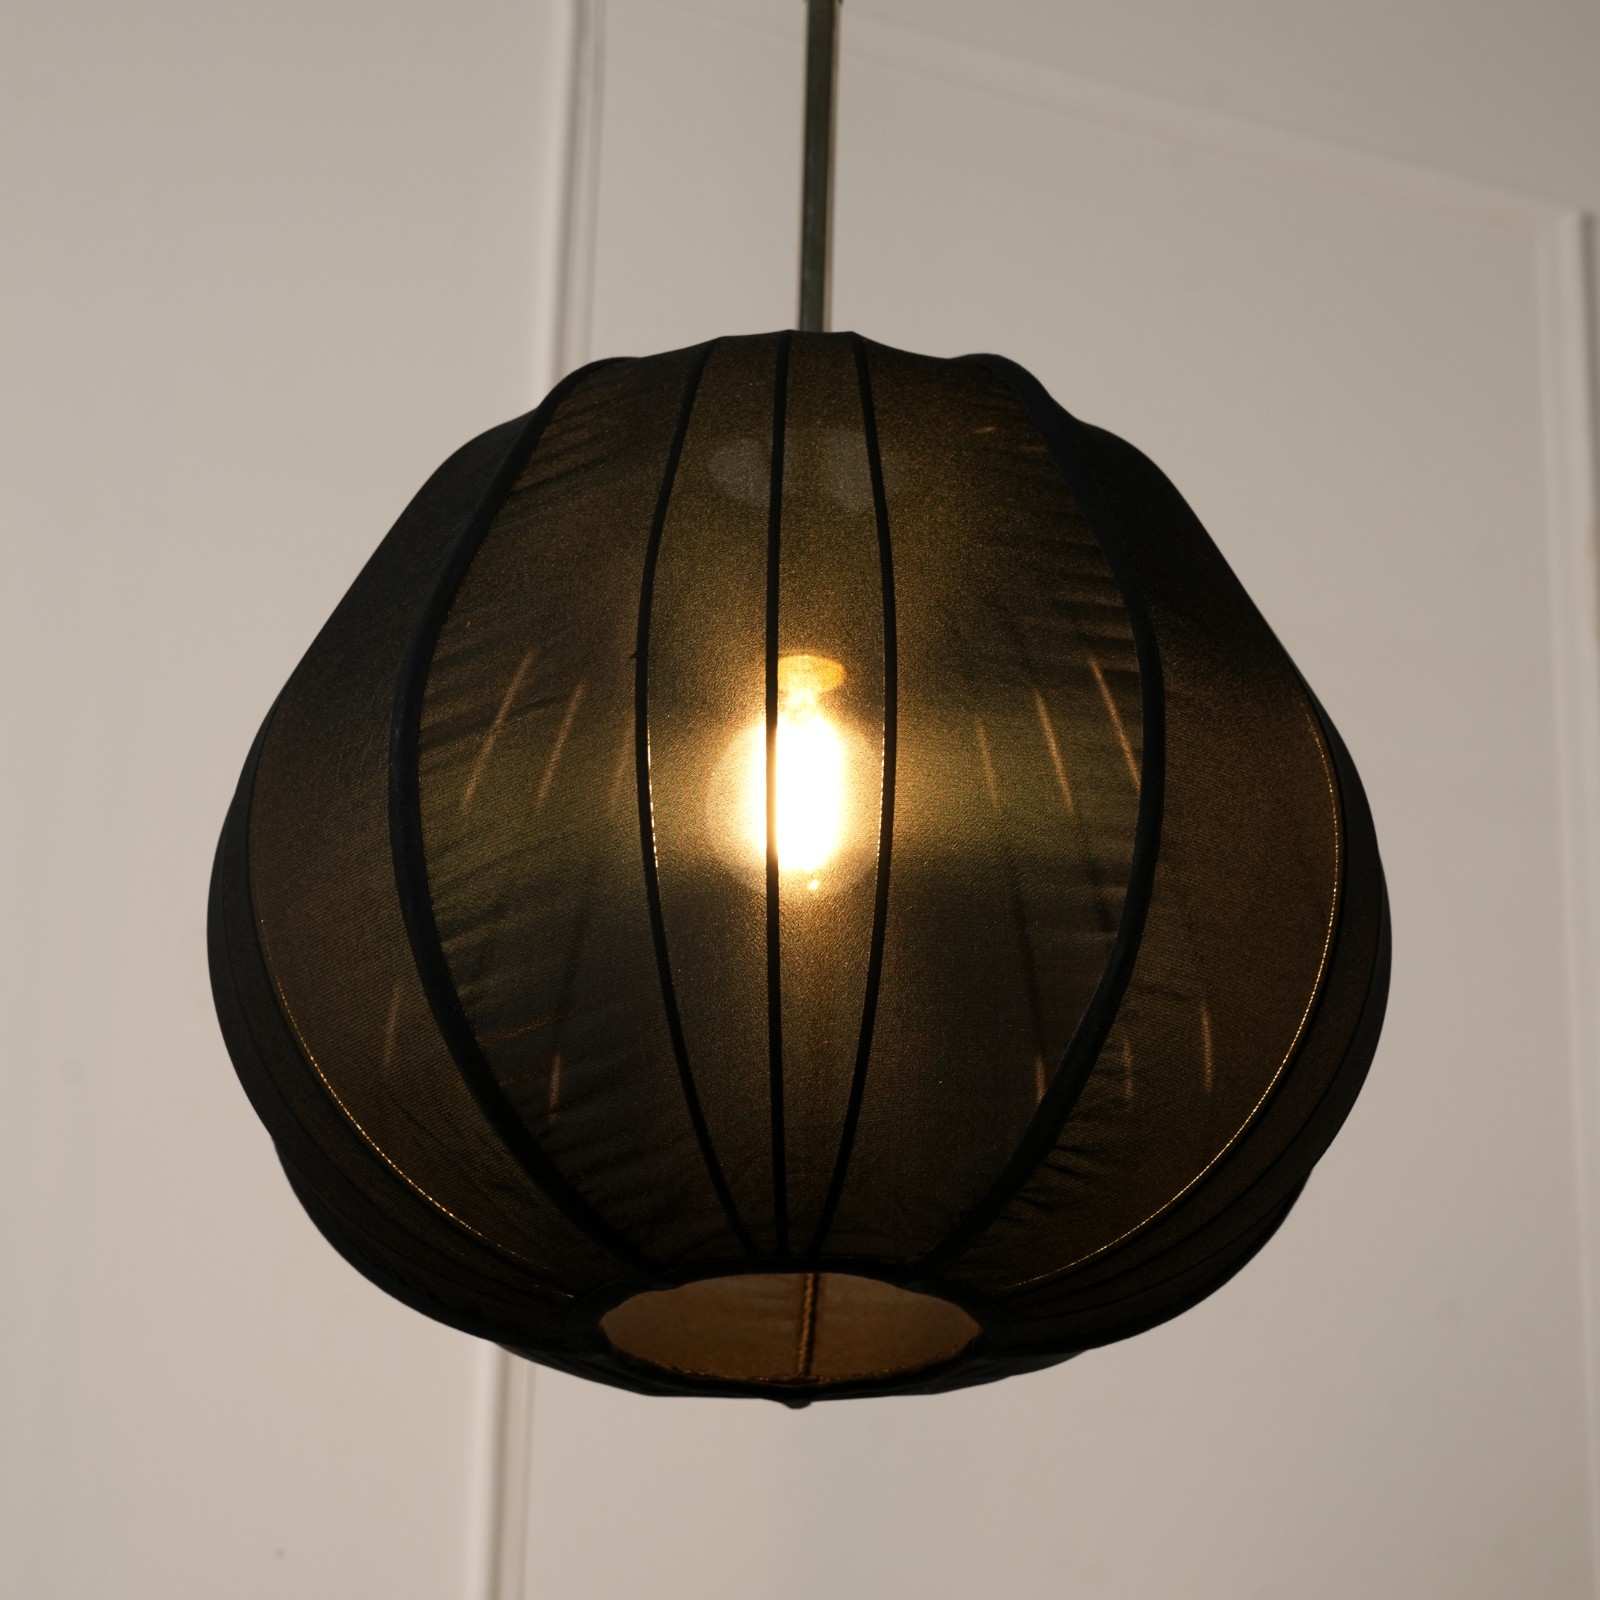 Luxe Collection - Berlin Lamp  - Premium Chiffon Fabric, Metallic Spacer, Soft Warm Glow, Mood Enhancement Lighting